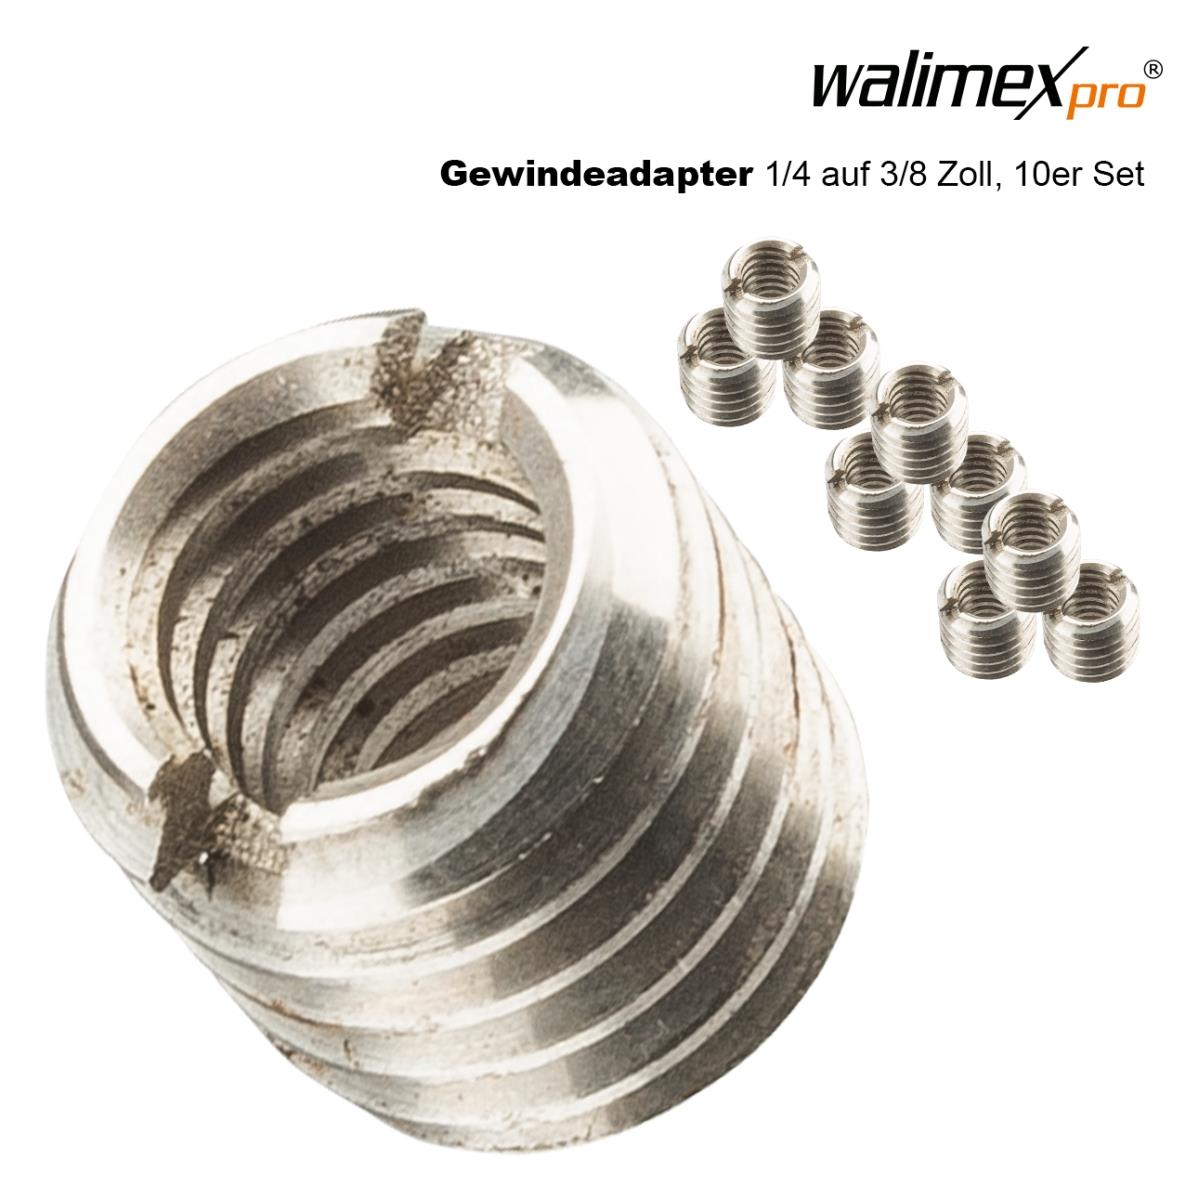 Walimex pro Gewindeadapter 1/4 - 3/8 Zoll, 10 Stck